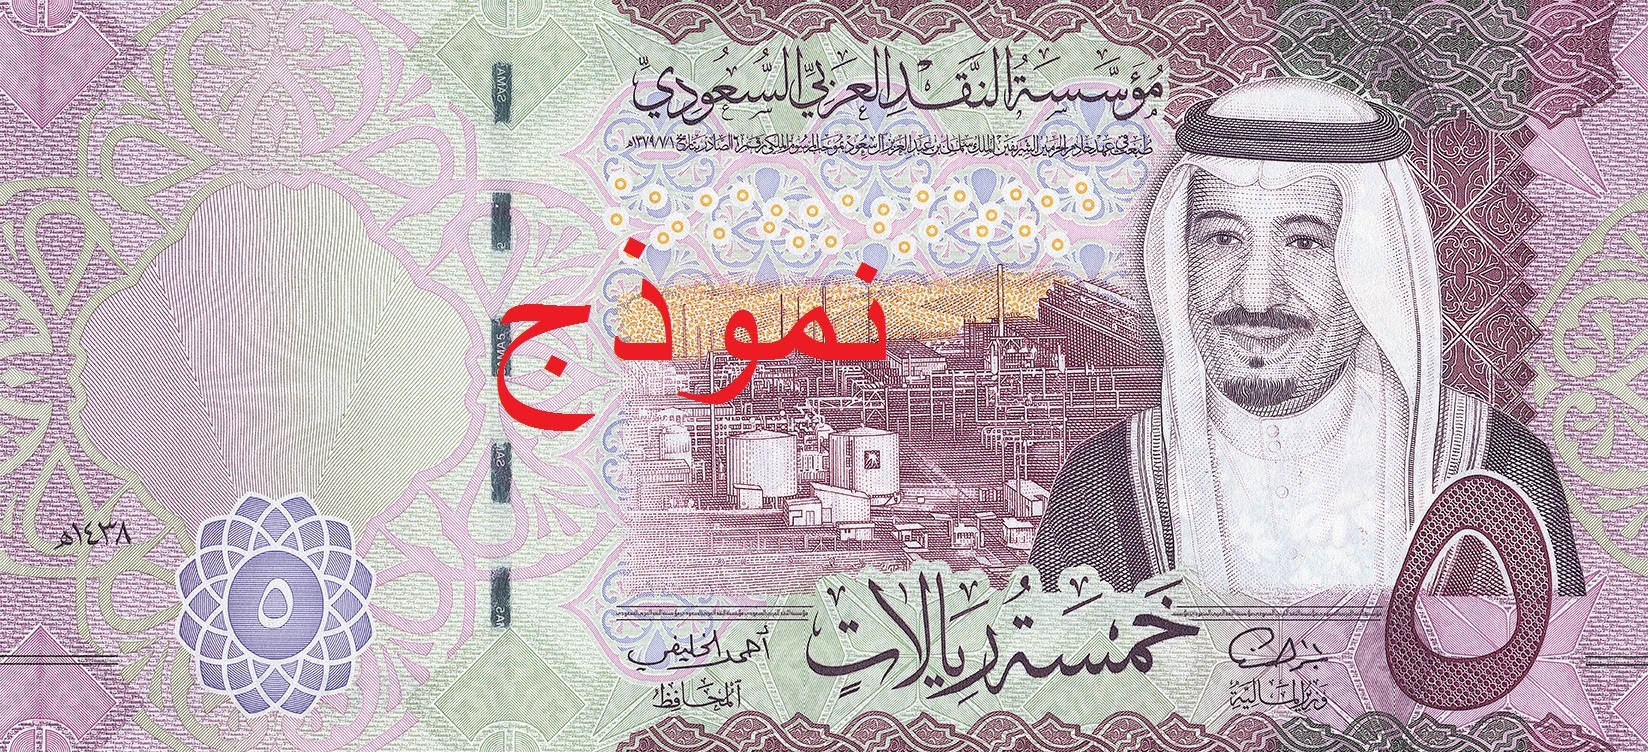 Obverse of banknote 5 Saudi riyal